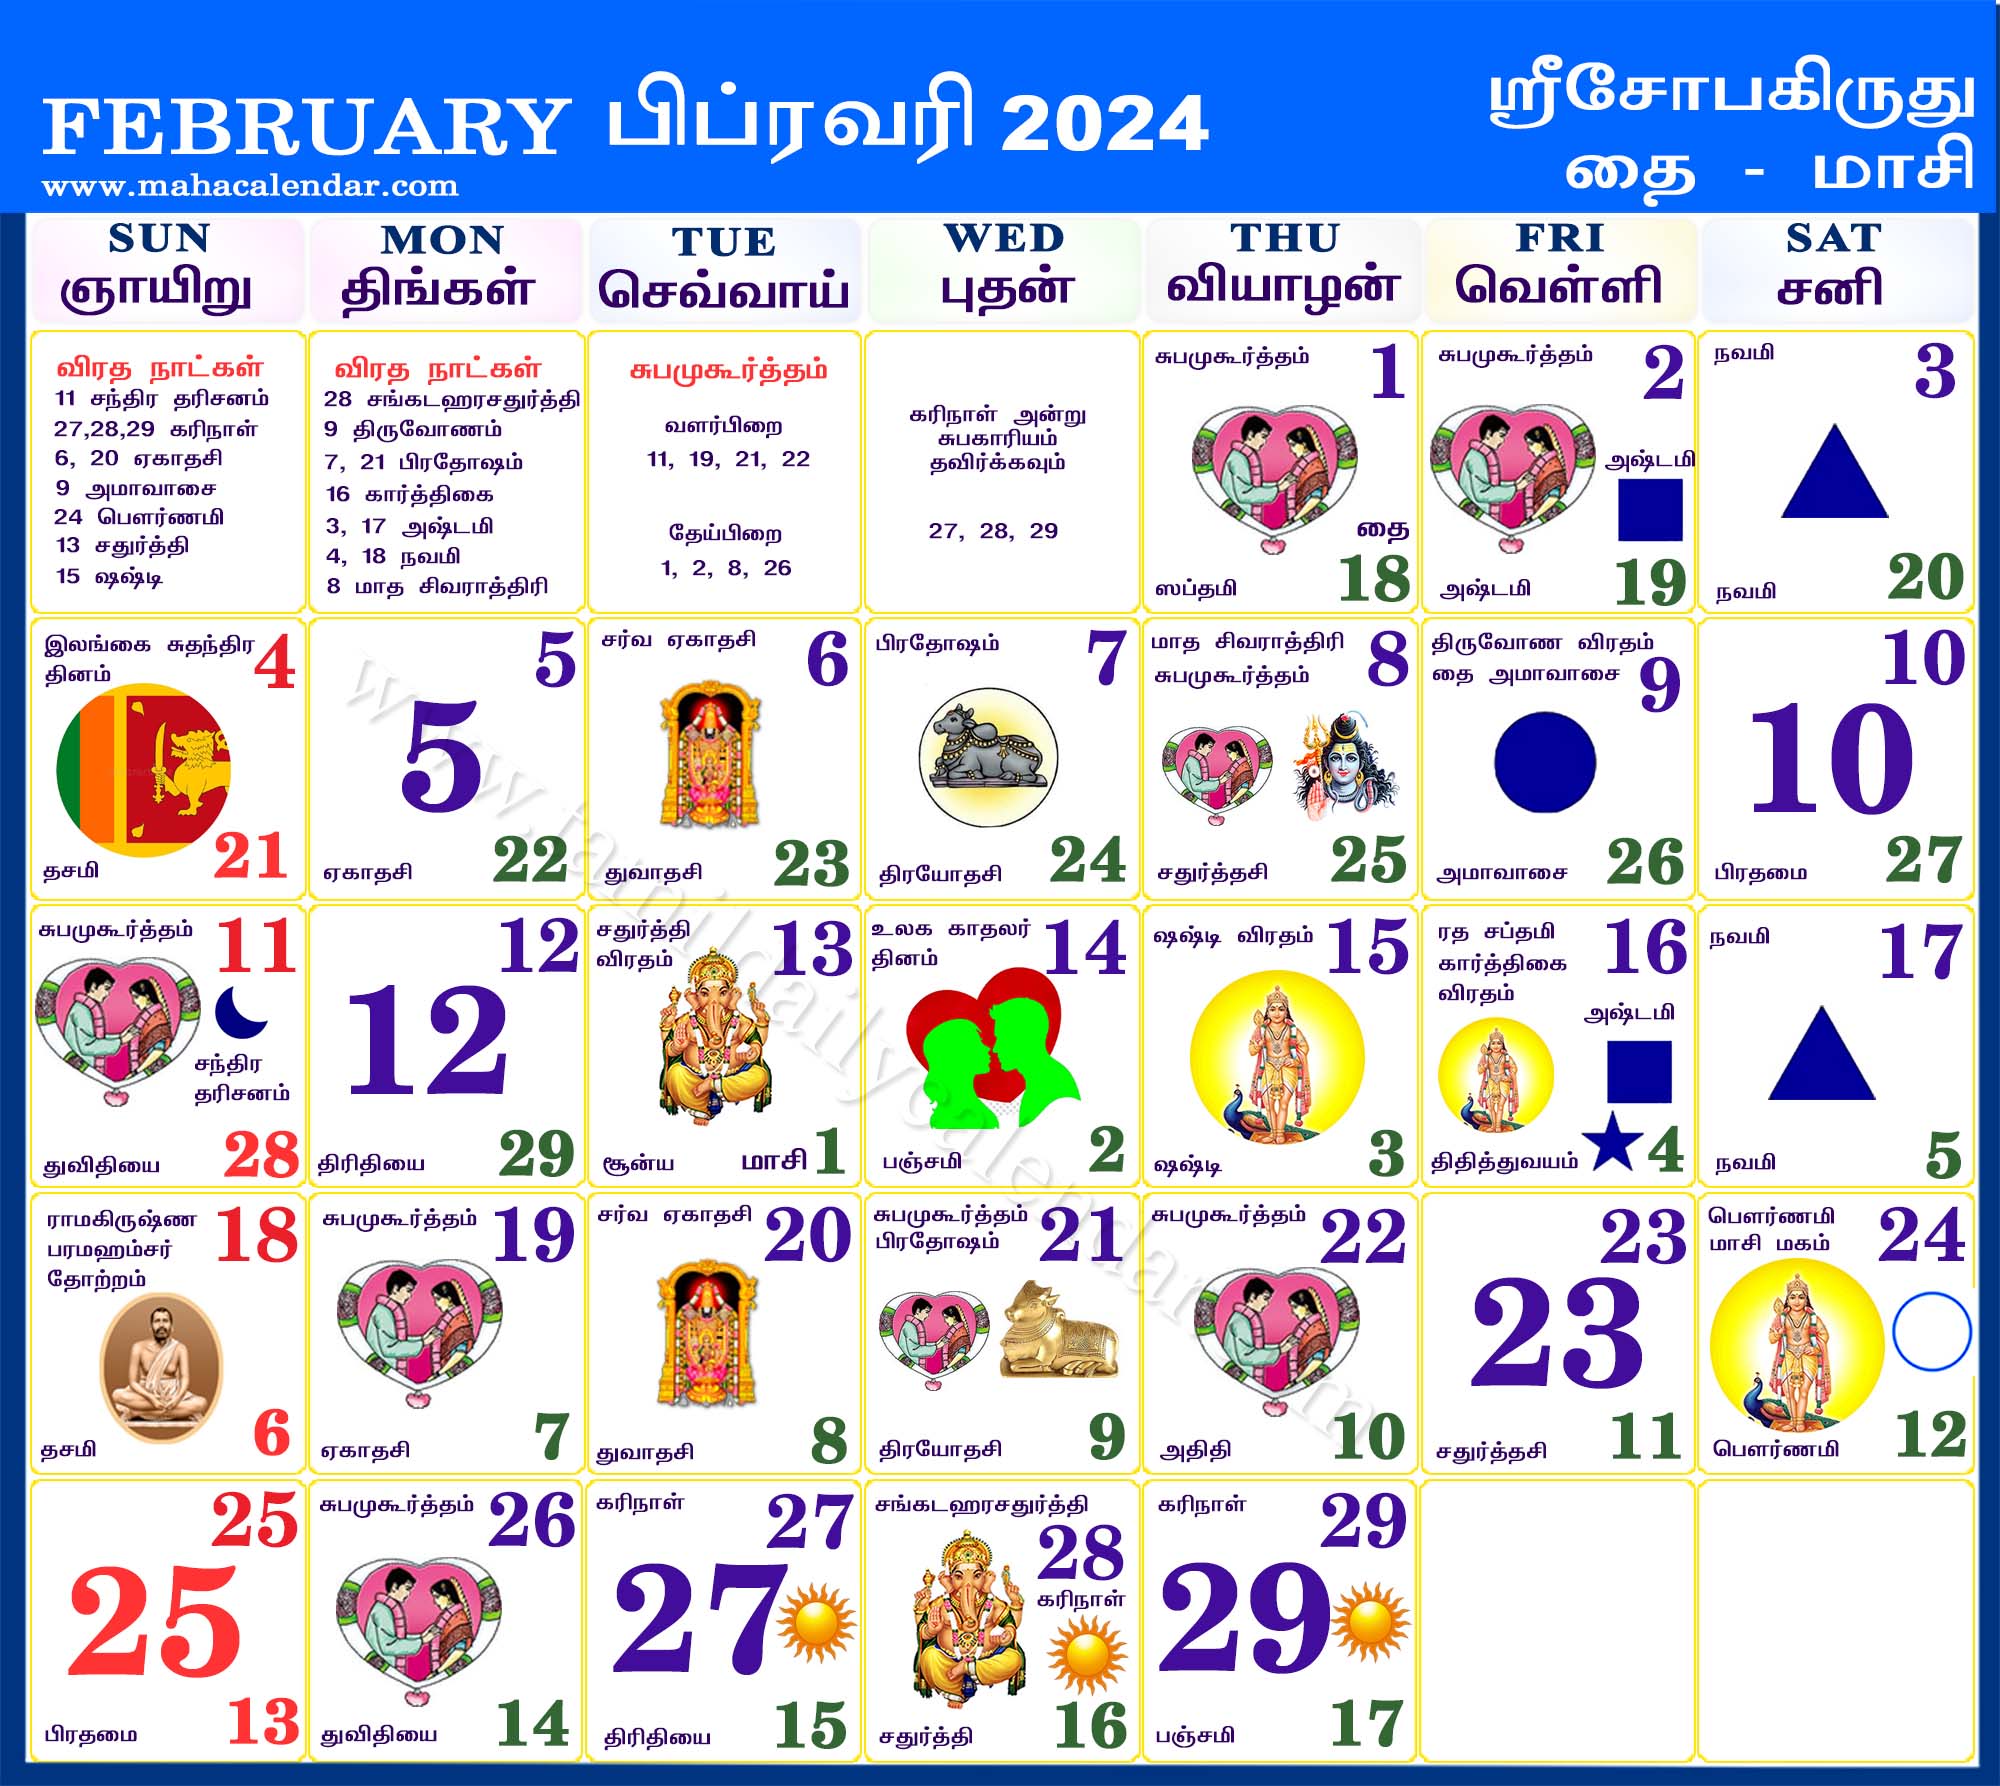 Tamil Calendar 2024 February Muhurtham Dates 2022 Printable 2024 Calendar